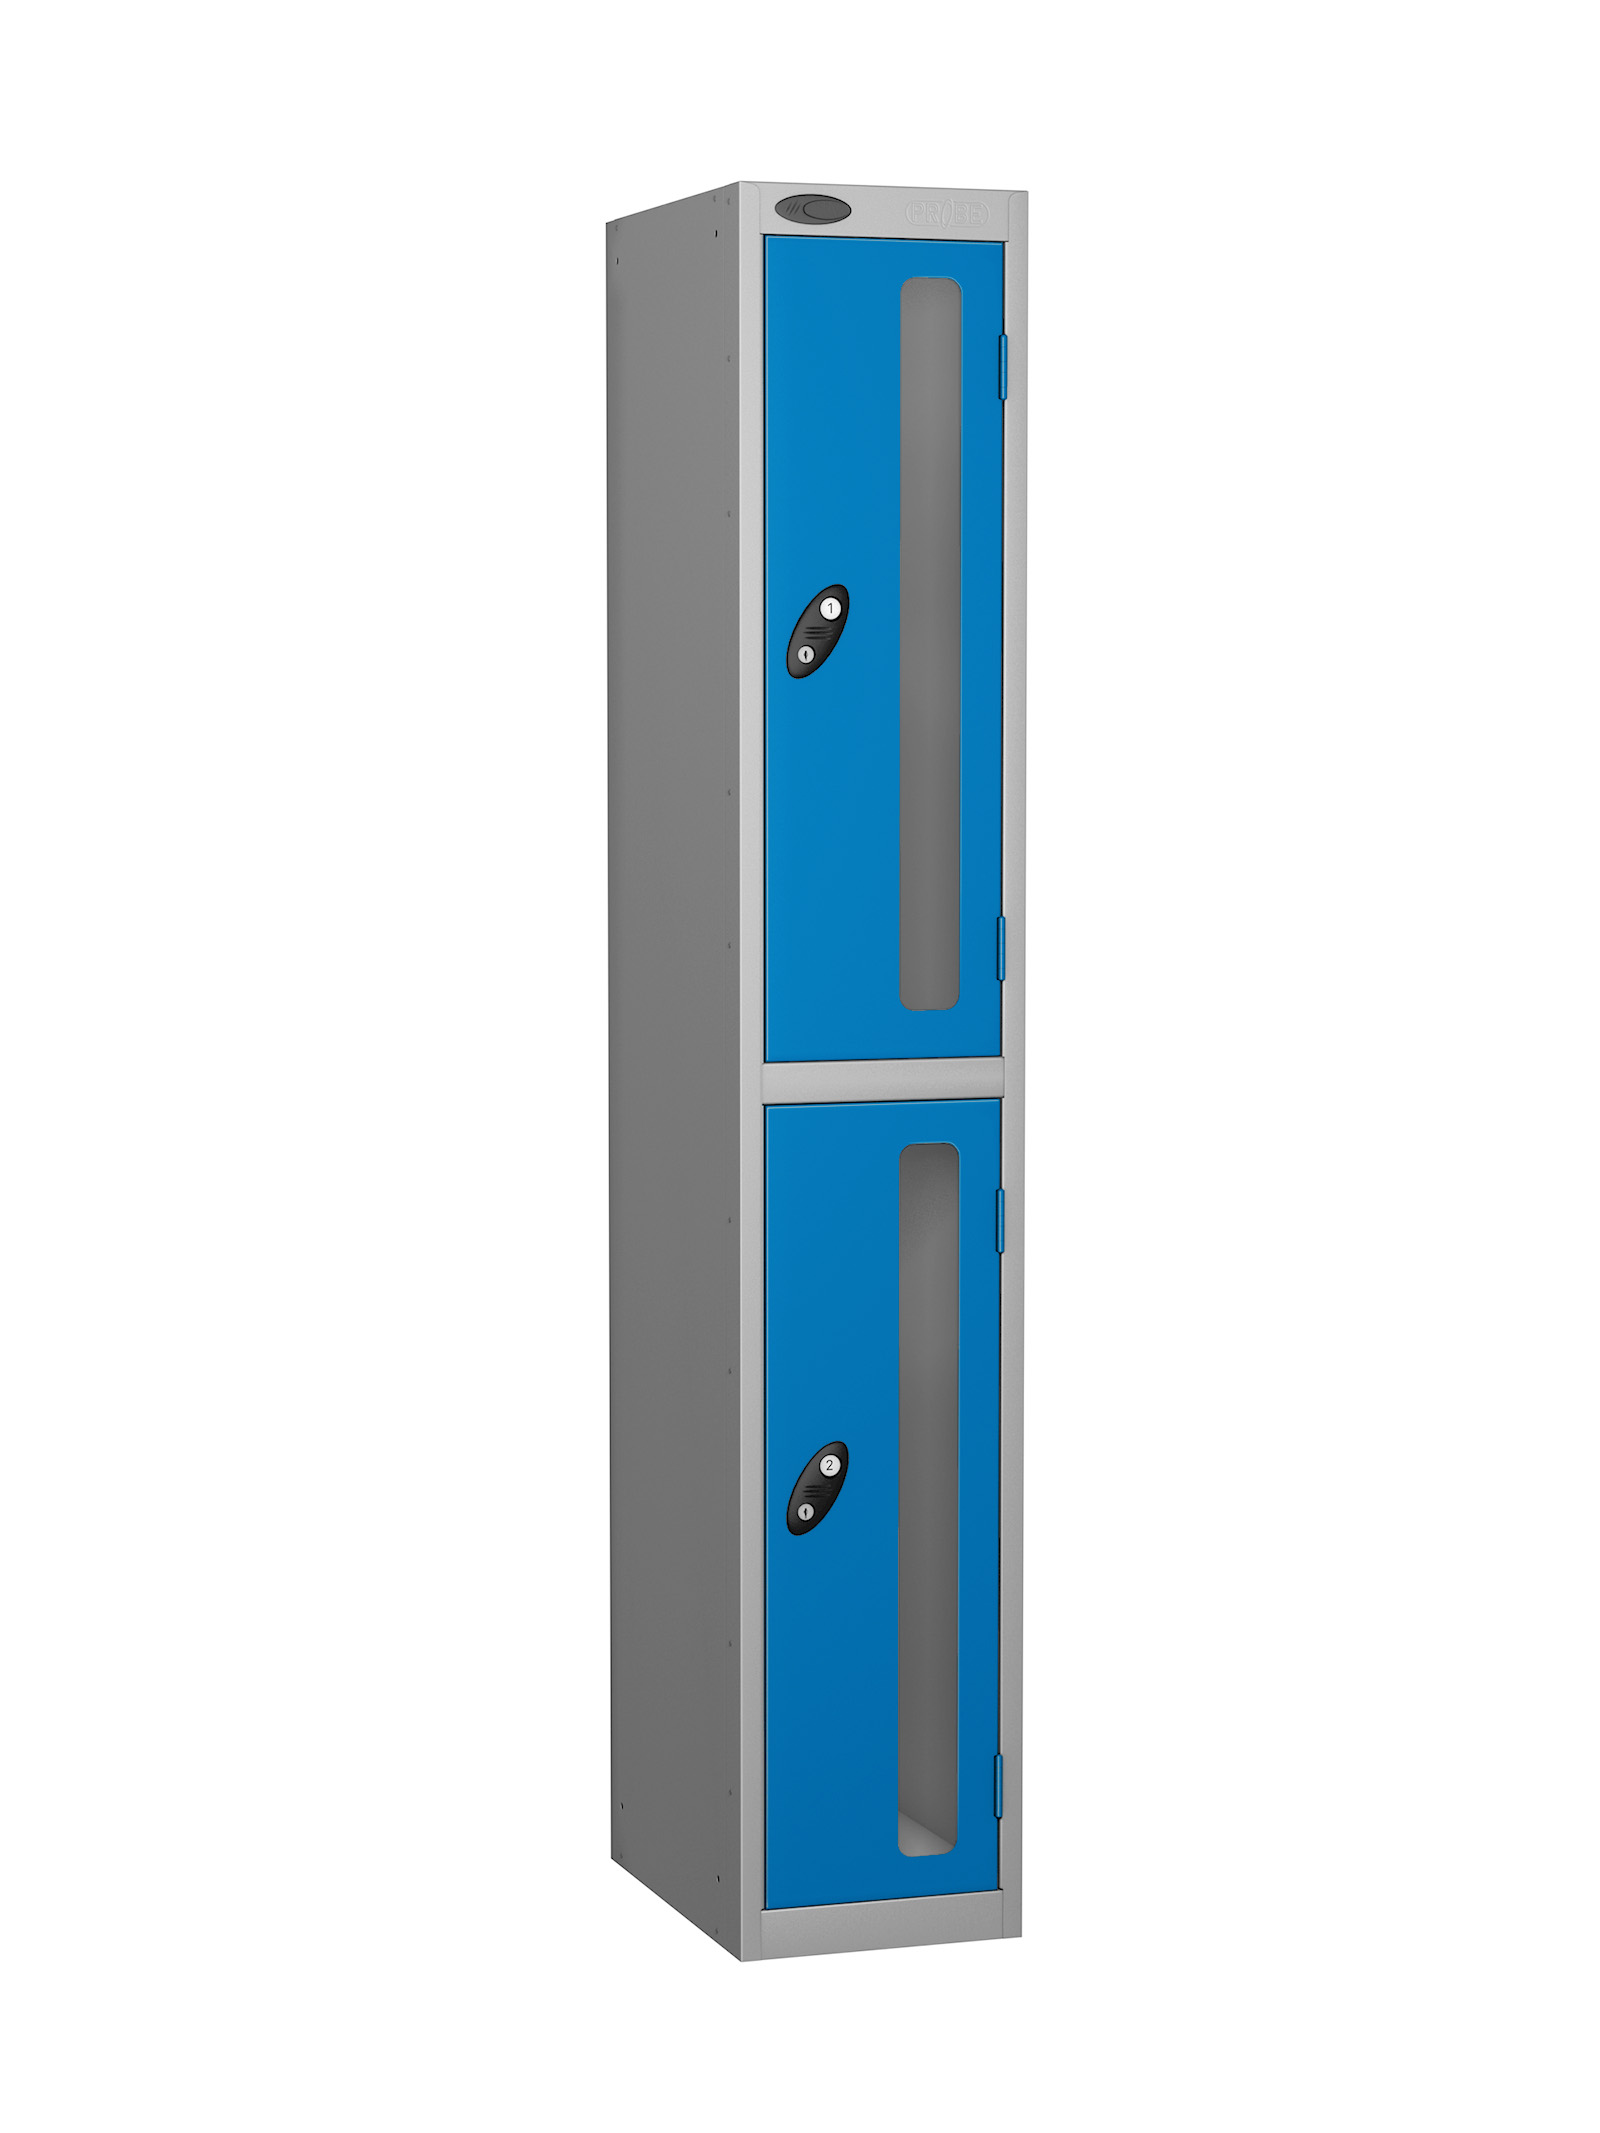 Probe 2 doors vision panel anti-stock theft locker blue